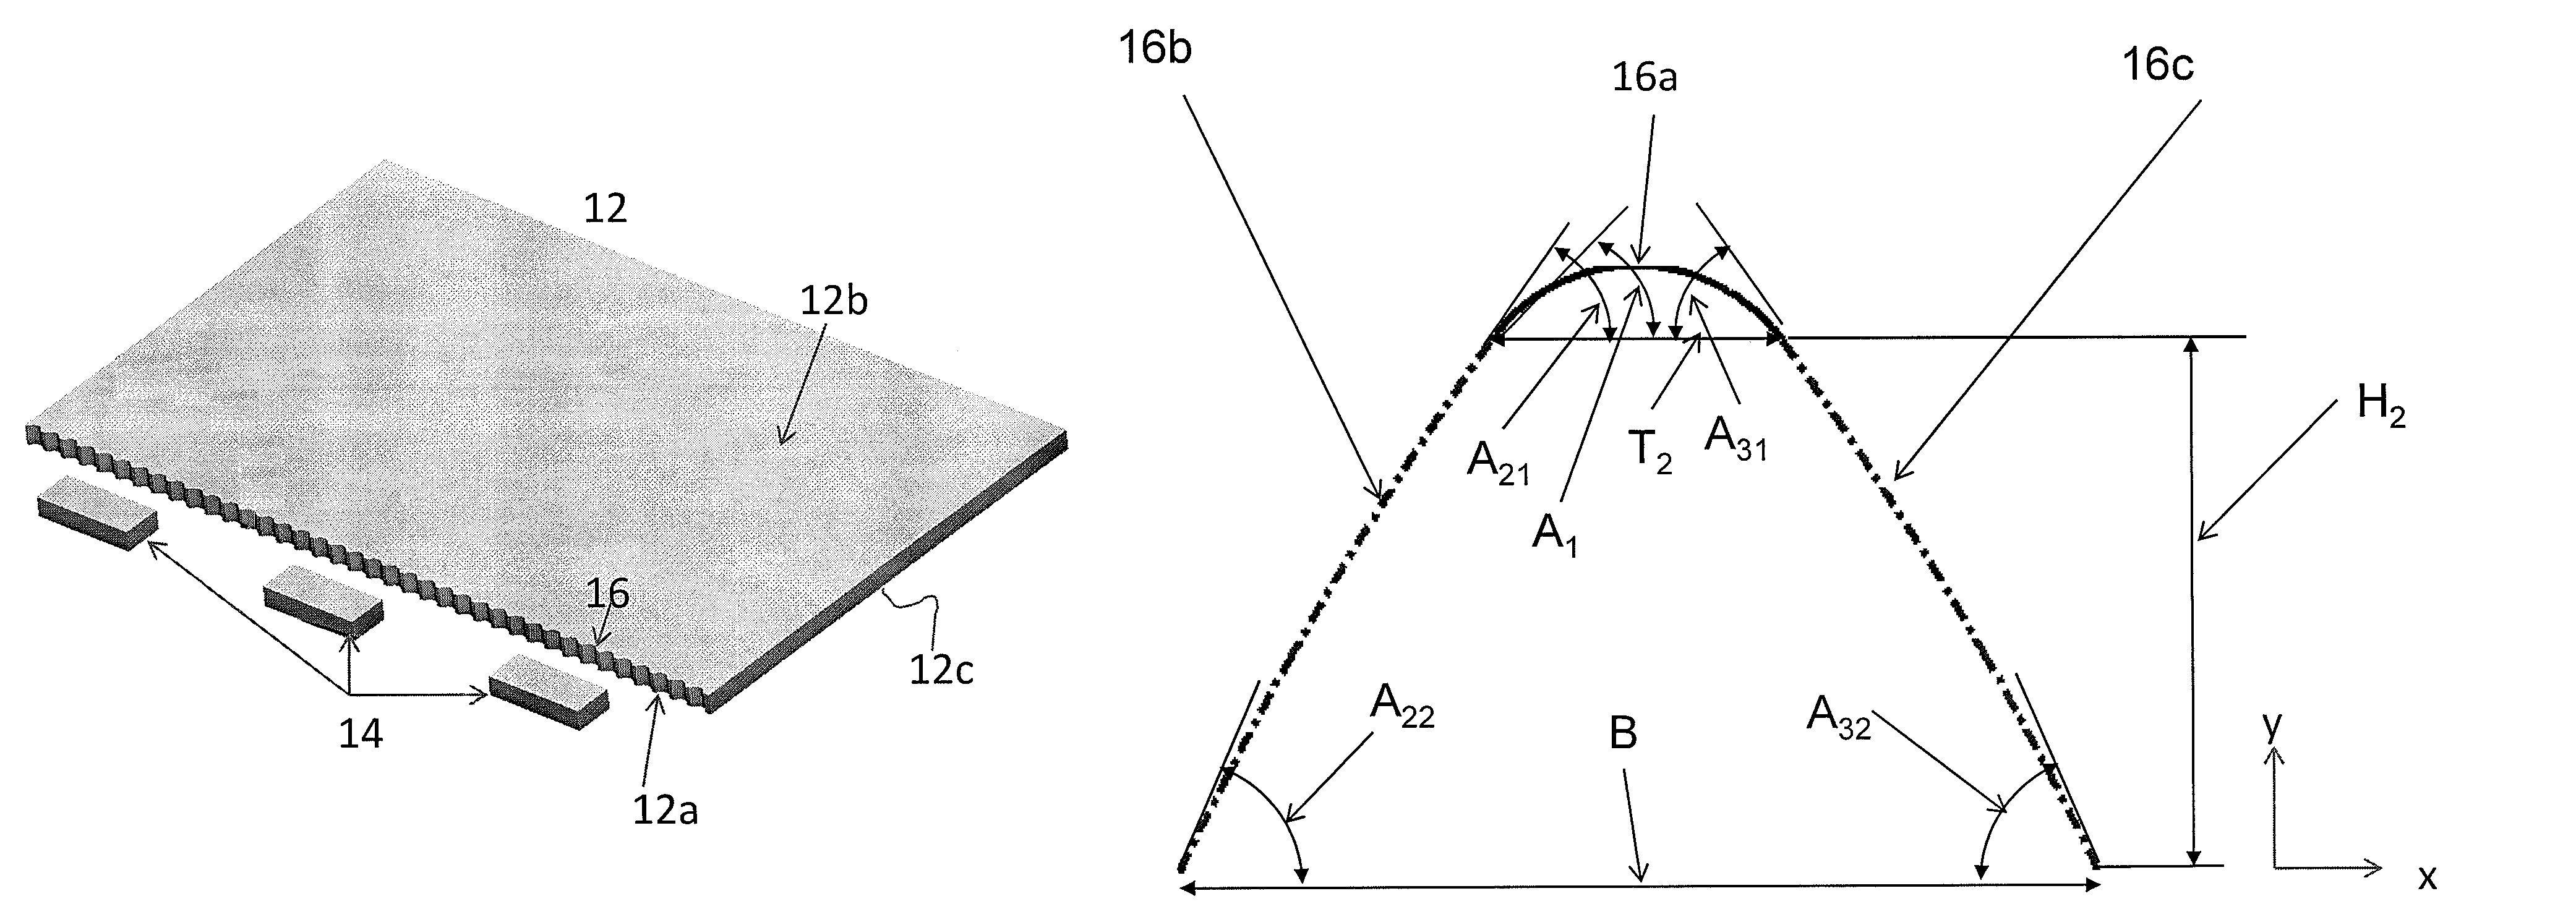 Symmetric serrated edge light guide having circular base segments